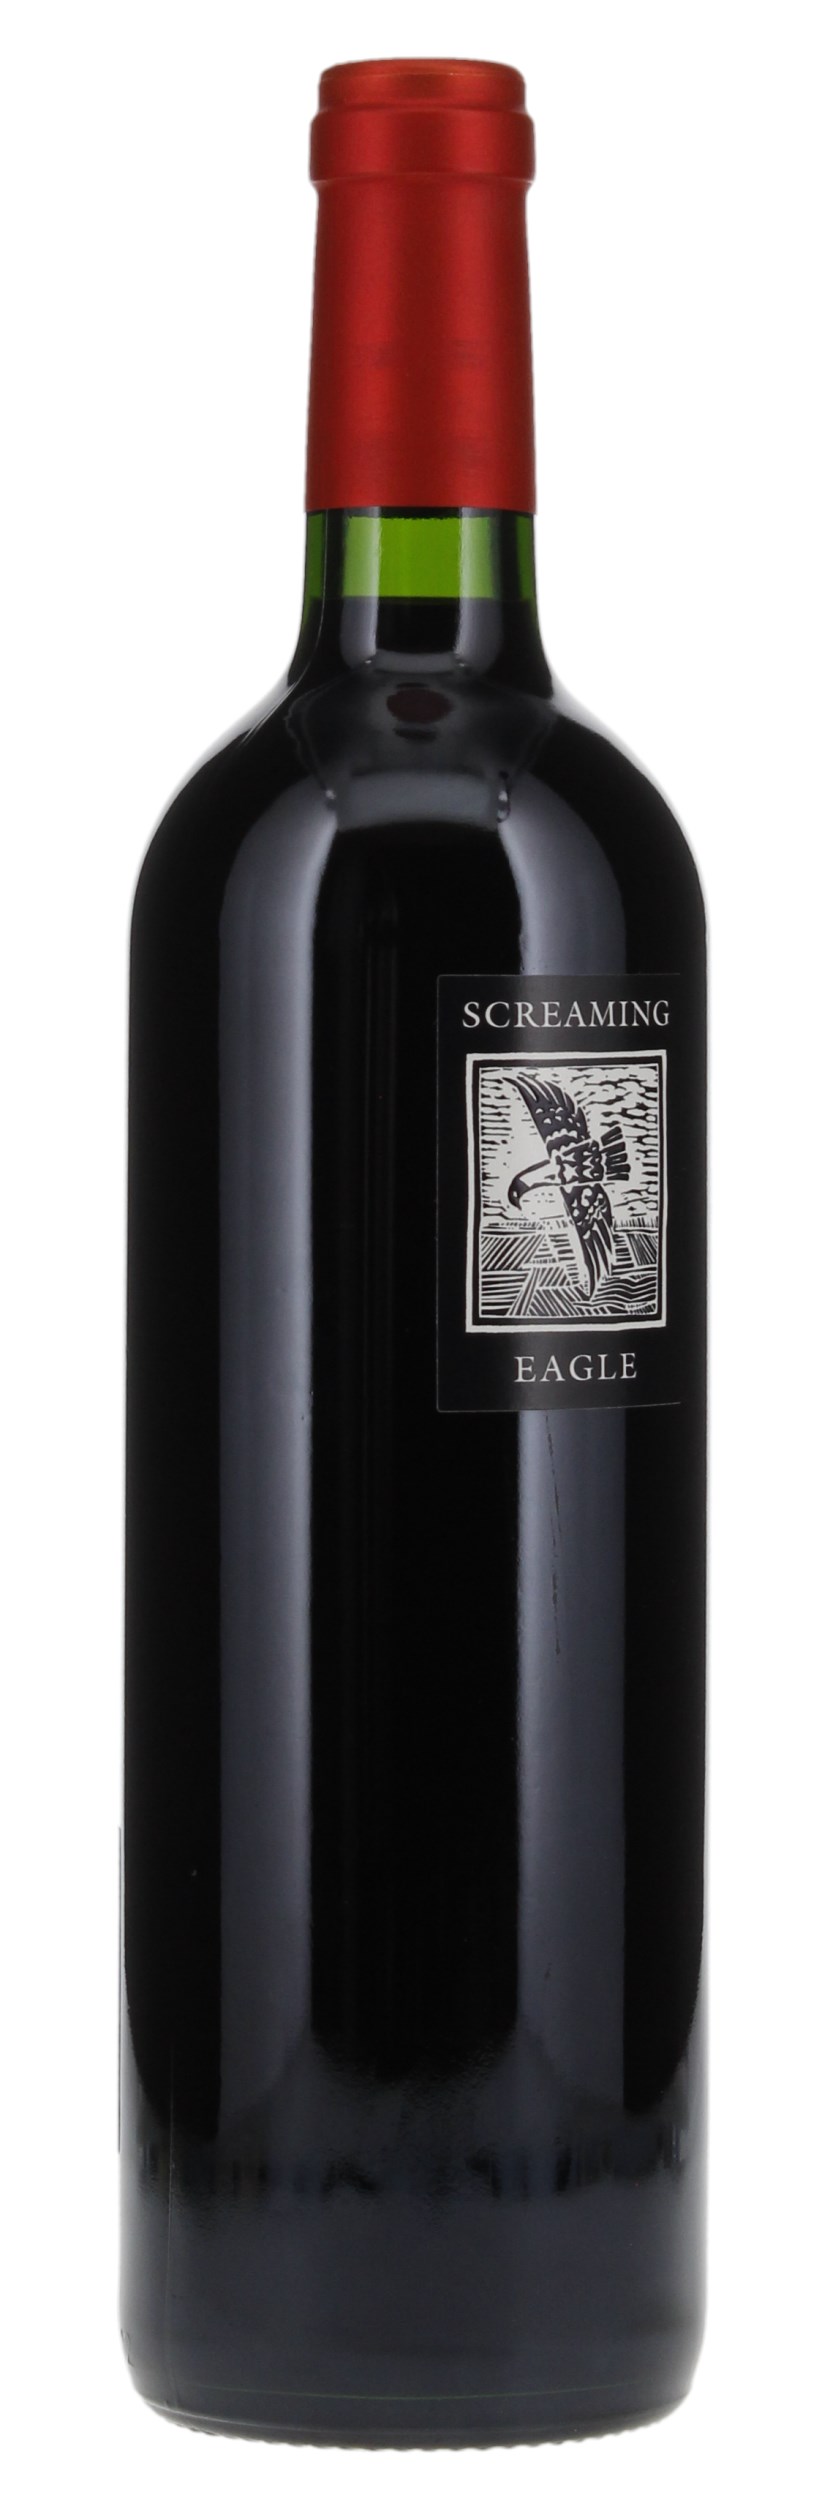 2005 Screaming Eagle Cabernet Sauvignon, 750ml